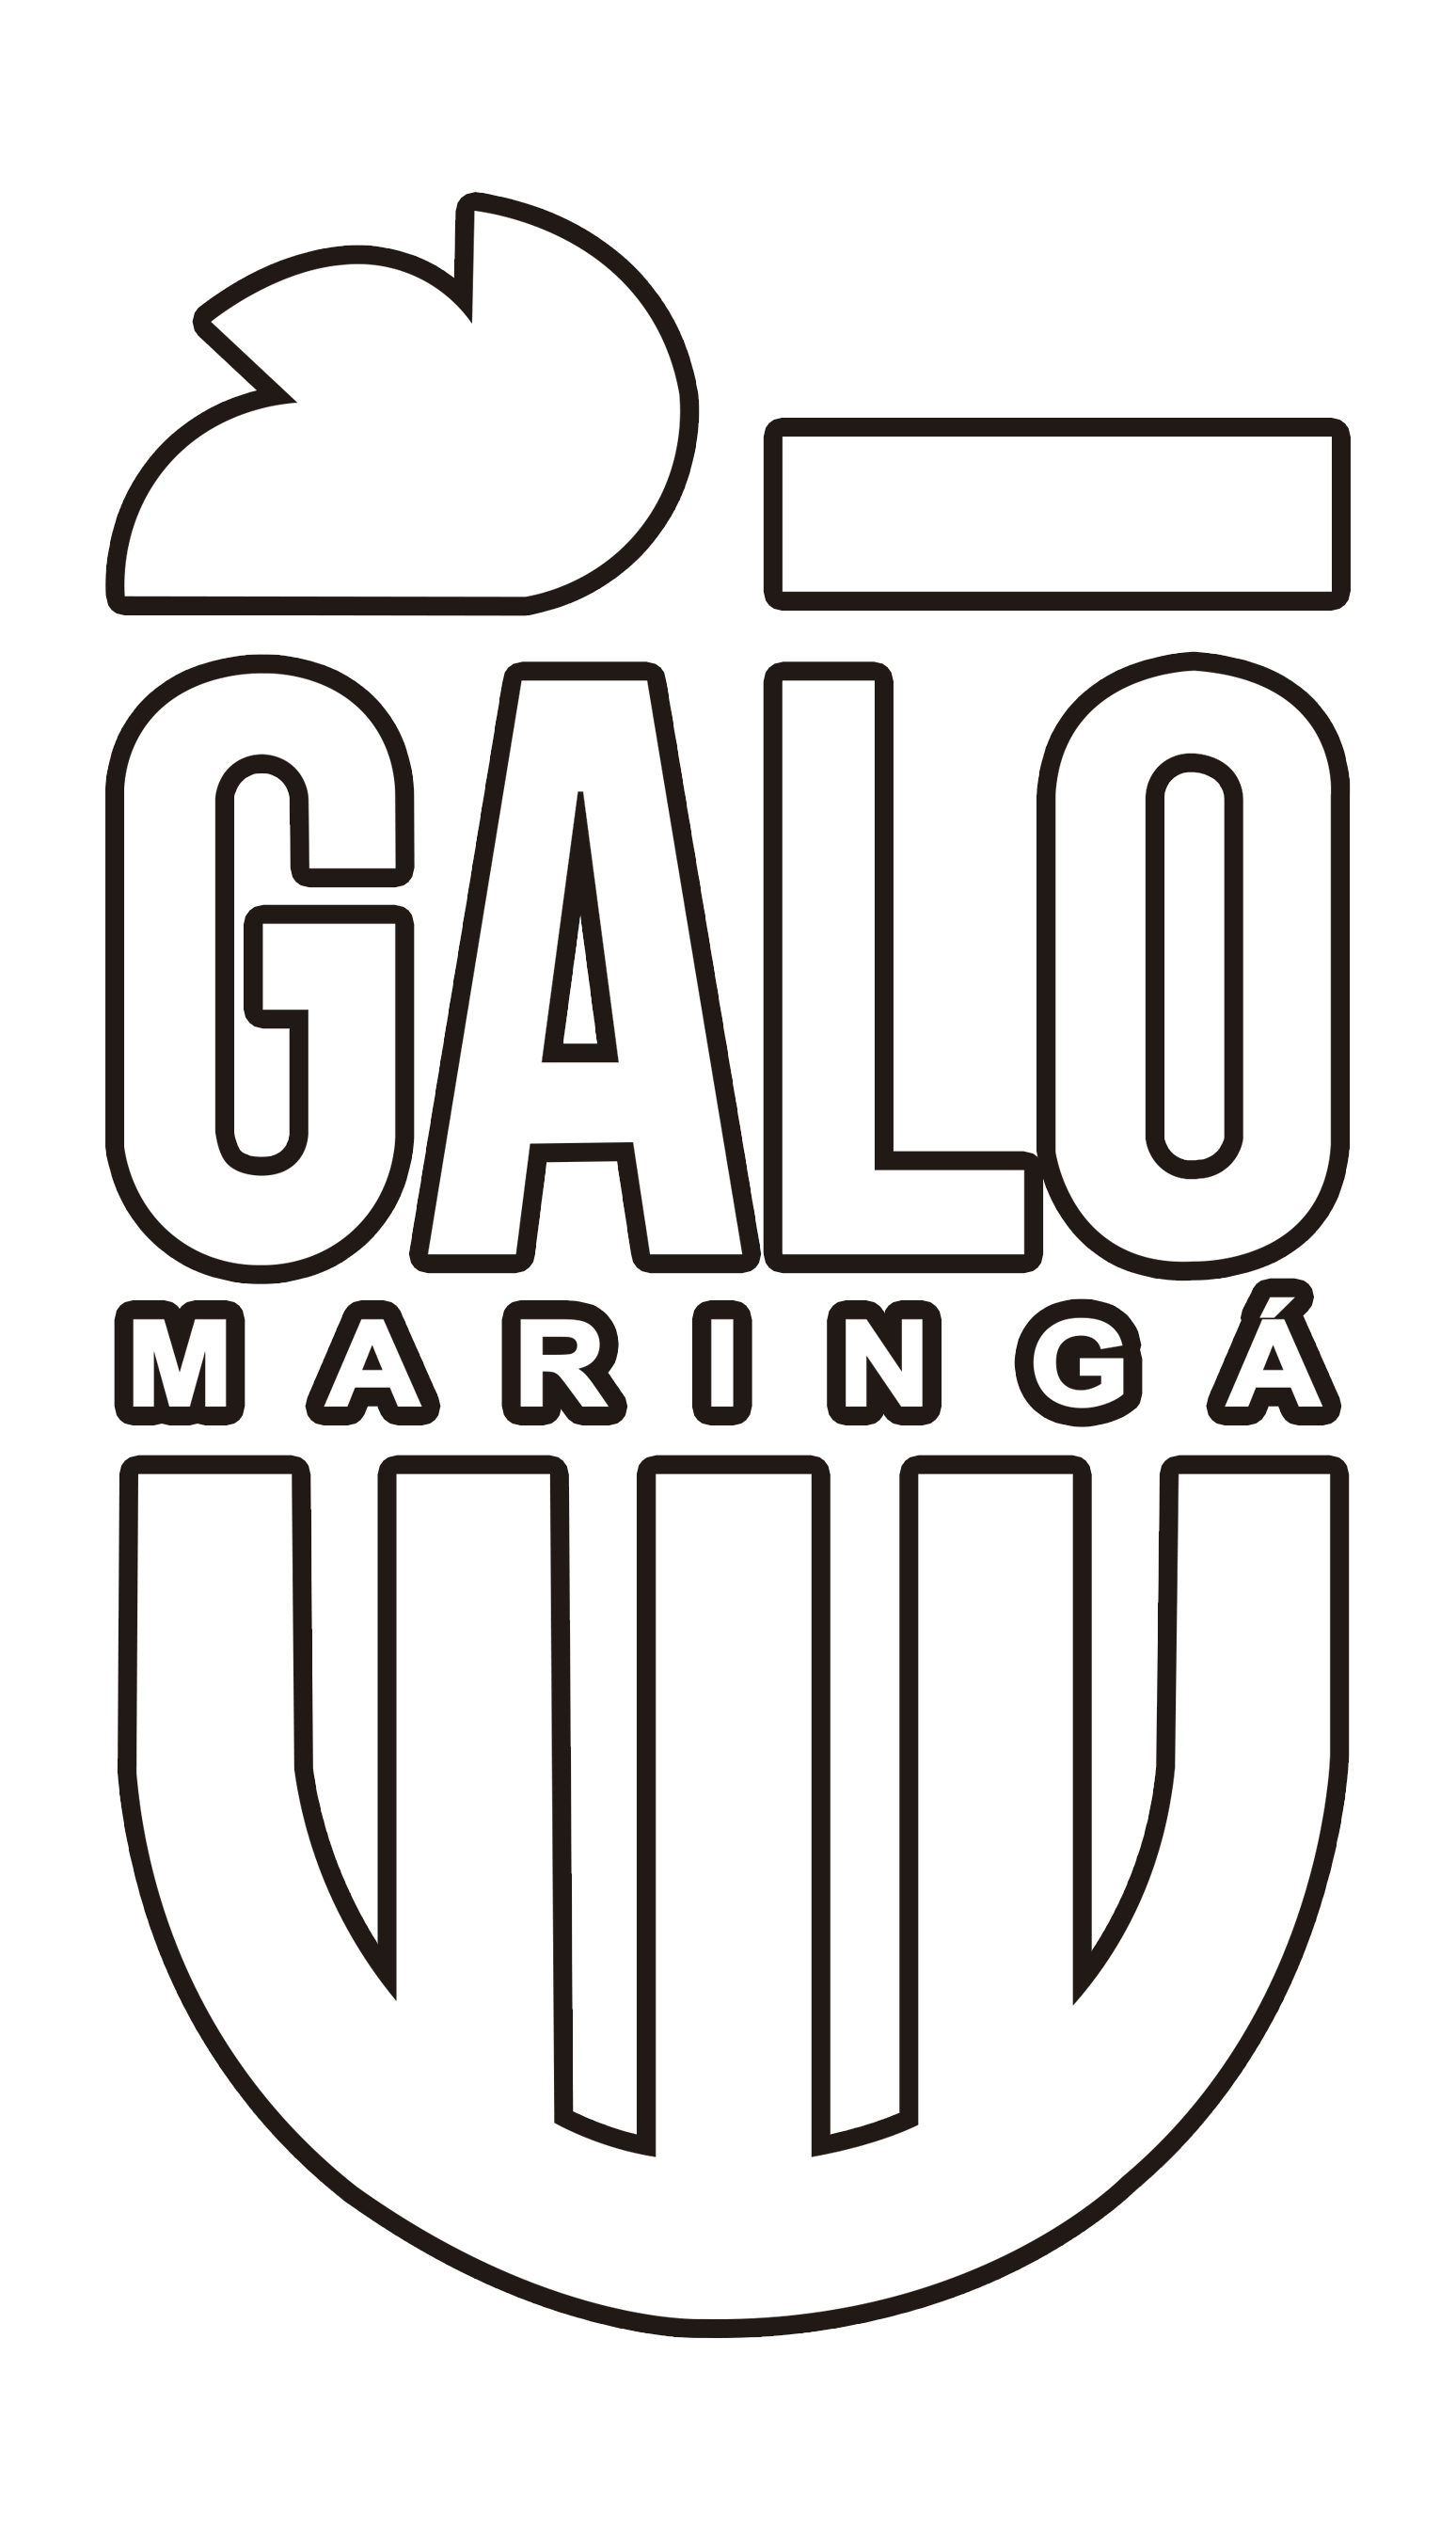 Galo馬林加